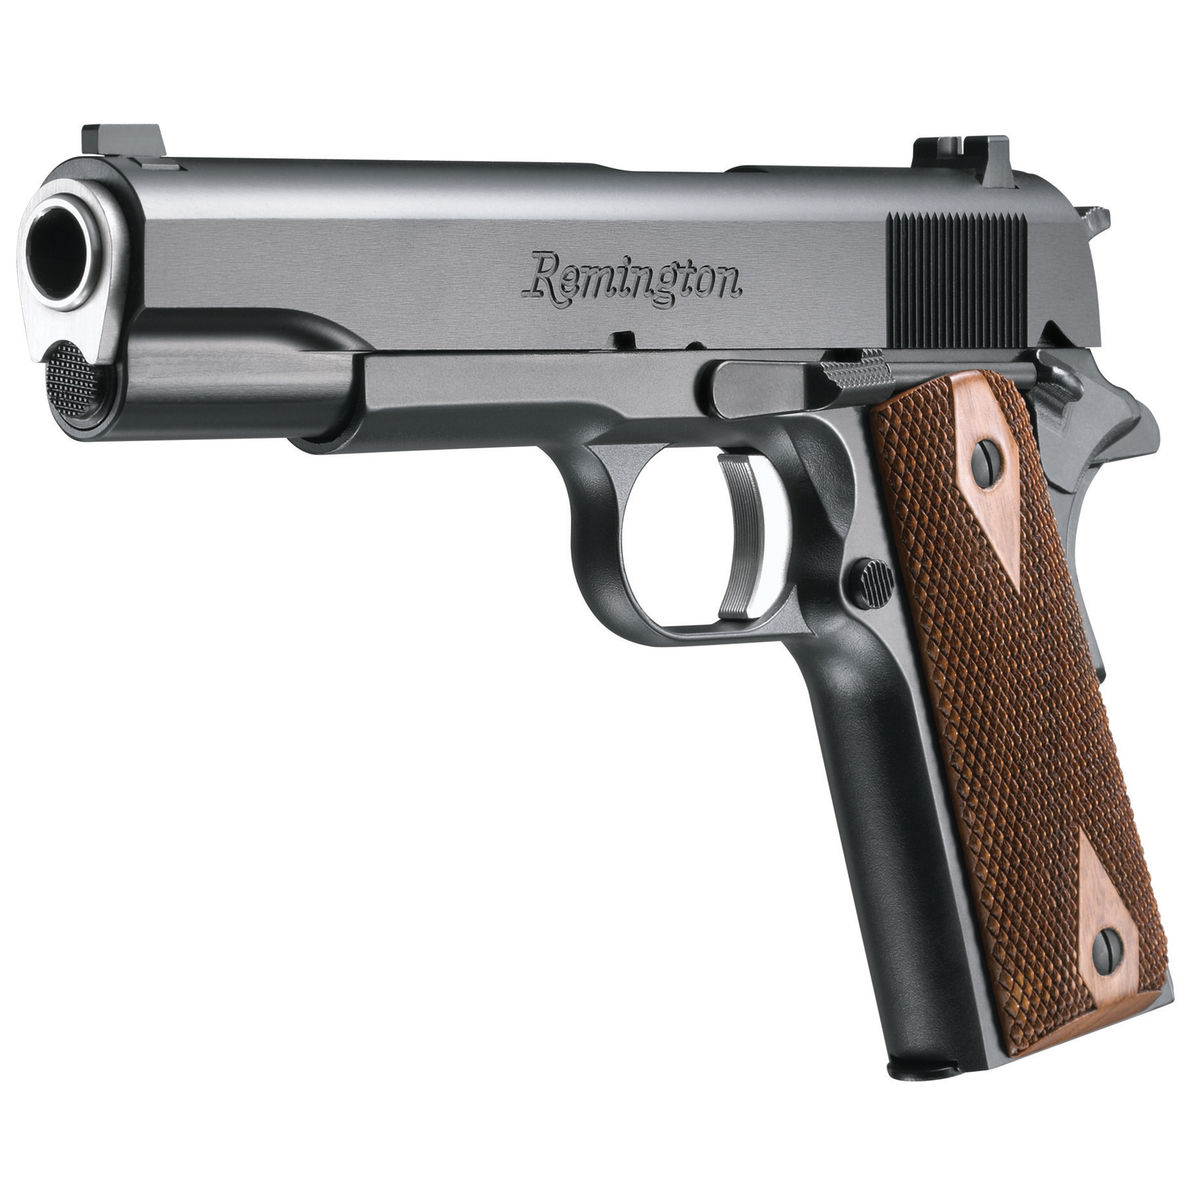 1200x1200 > Remington Pistol Wallpapers